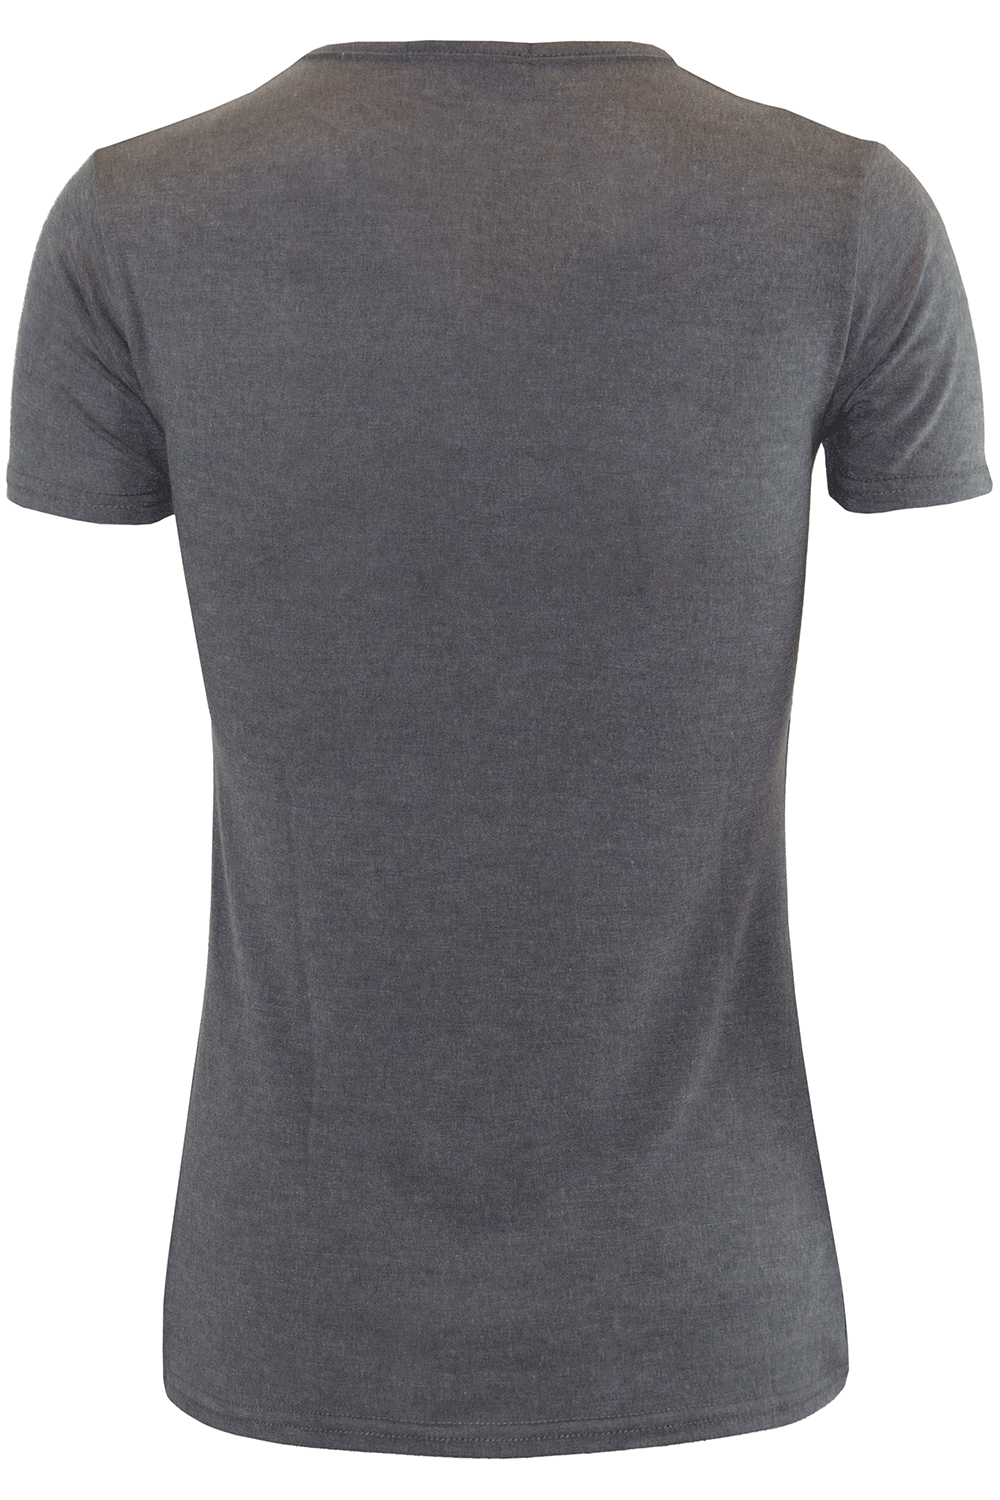 Cardie Vneck Basic Jersey Short Sleeve TShirt - bejealous-com